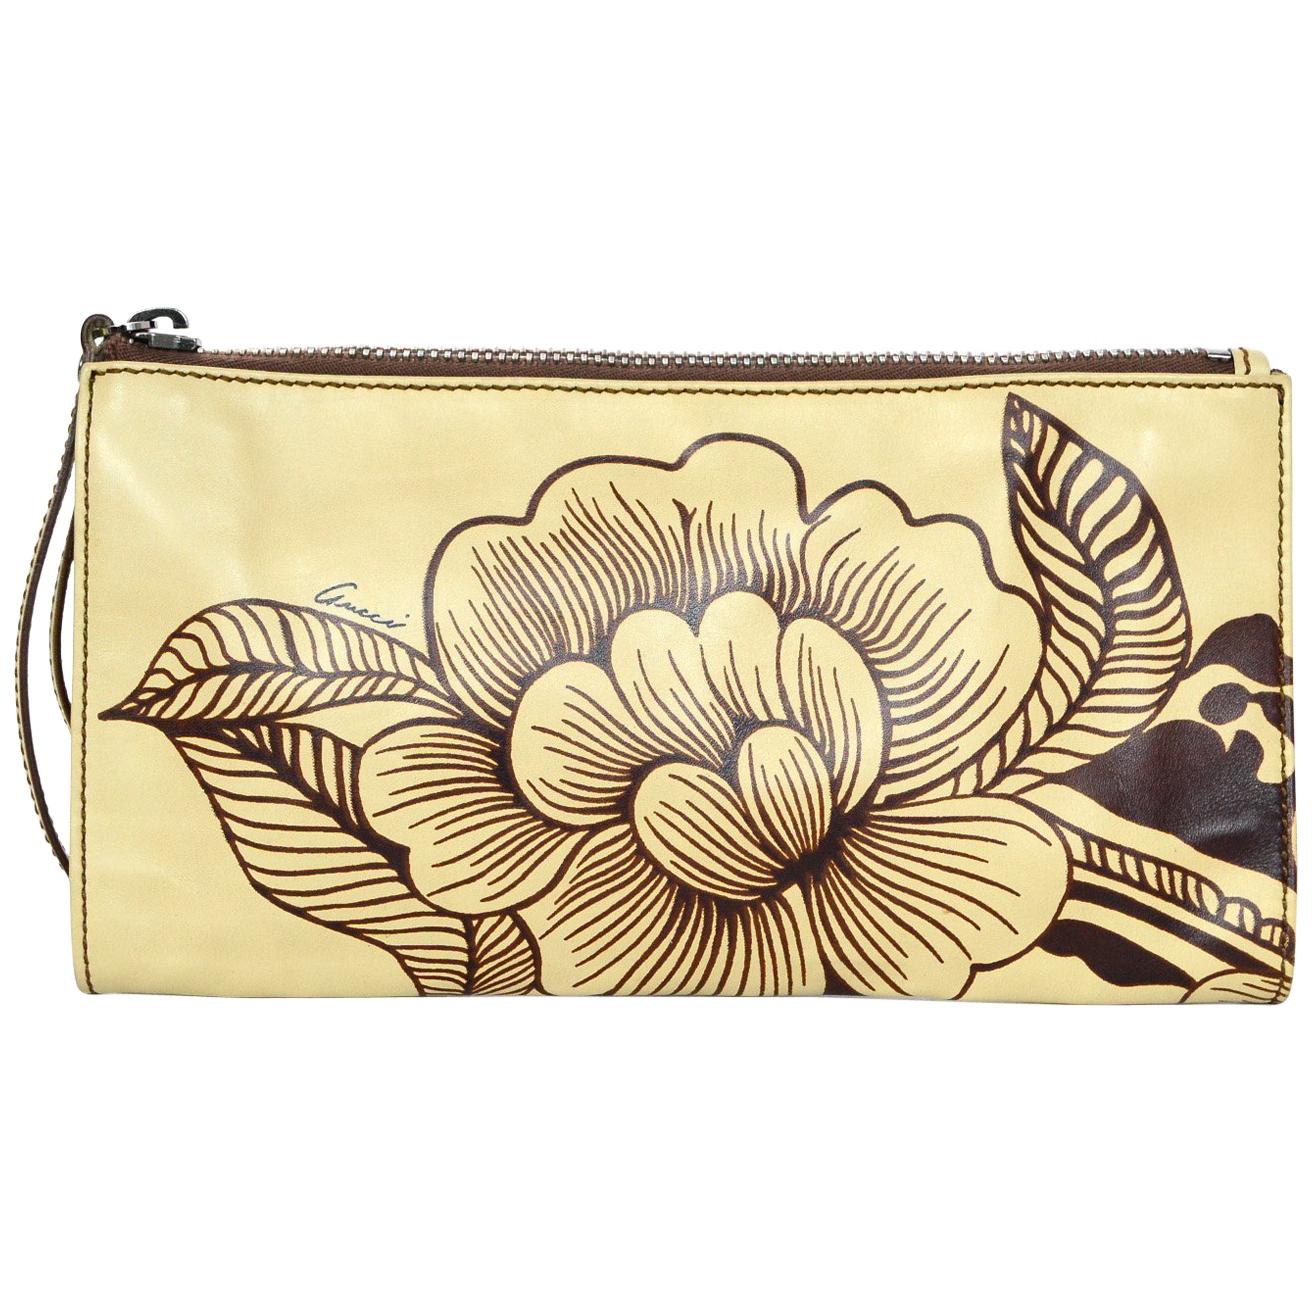 Gucci Tan/Brown Floral Leather Wristlet Bag w/ Dust Bag